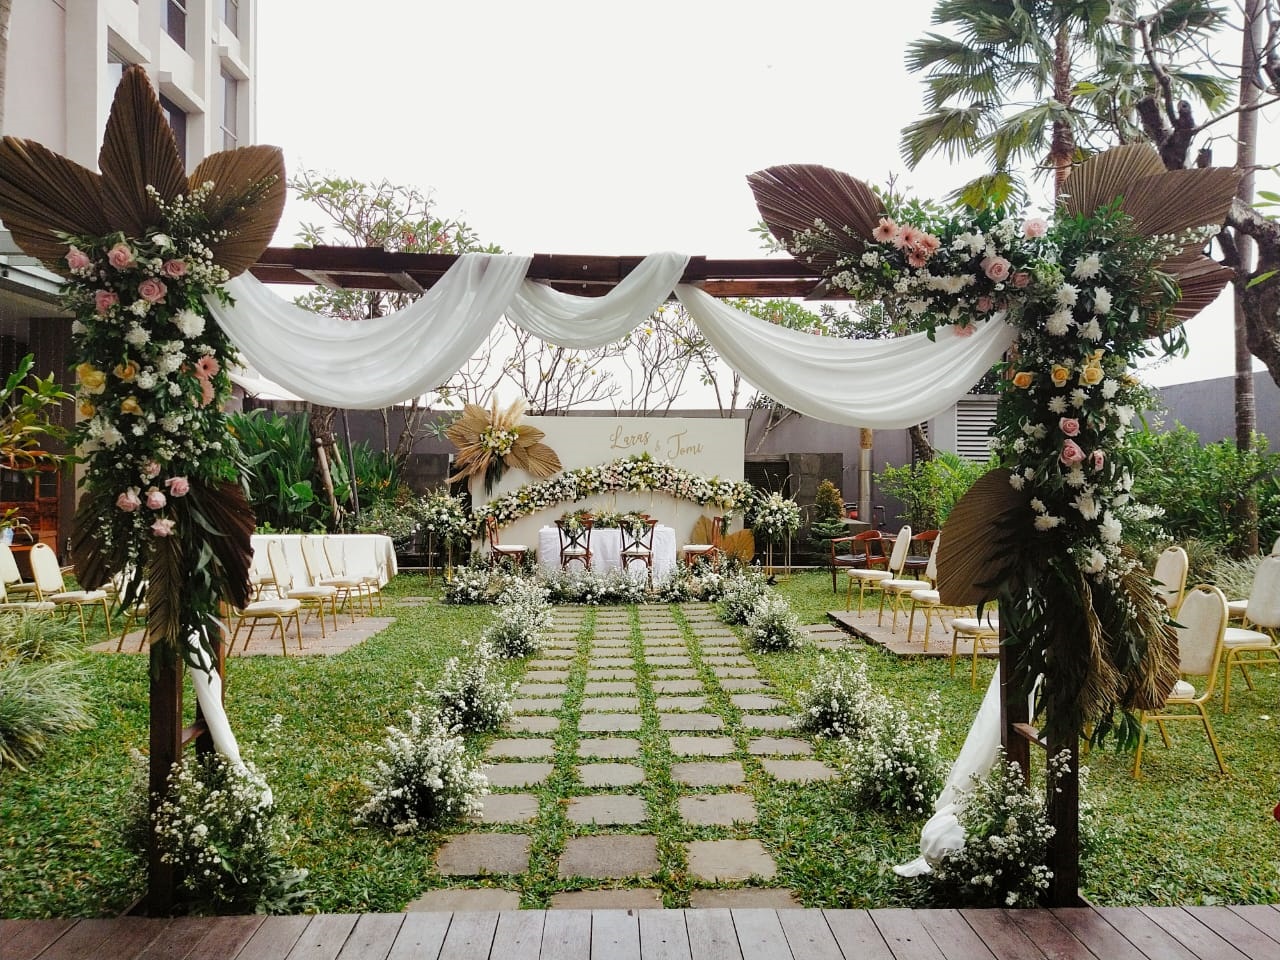 Wedding venue outdoor di Soll Marina Hotel Serpong. (tangselpos.id/lim)